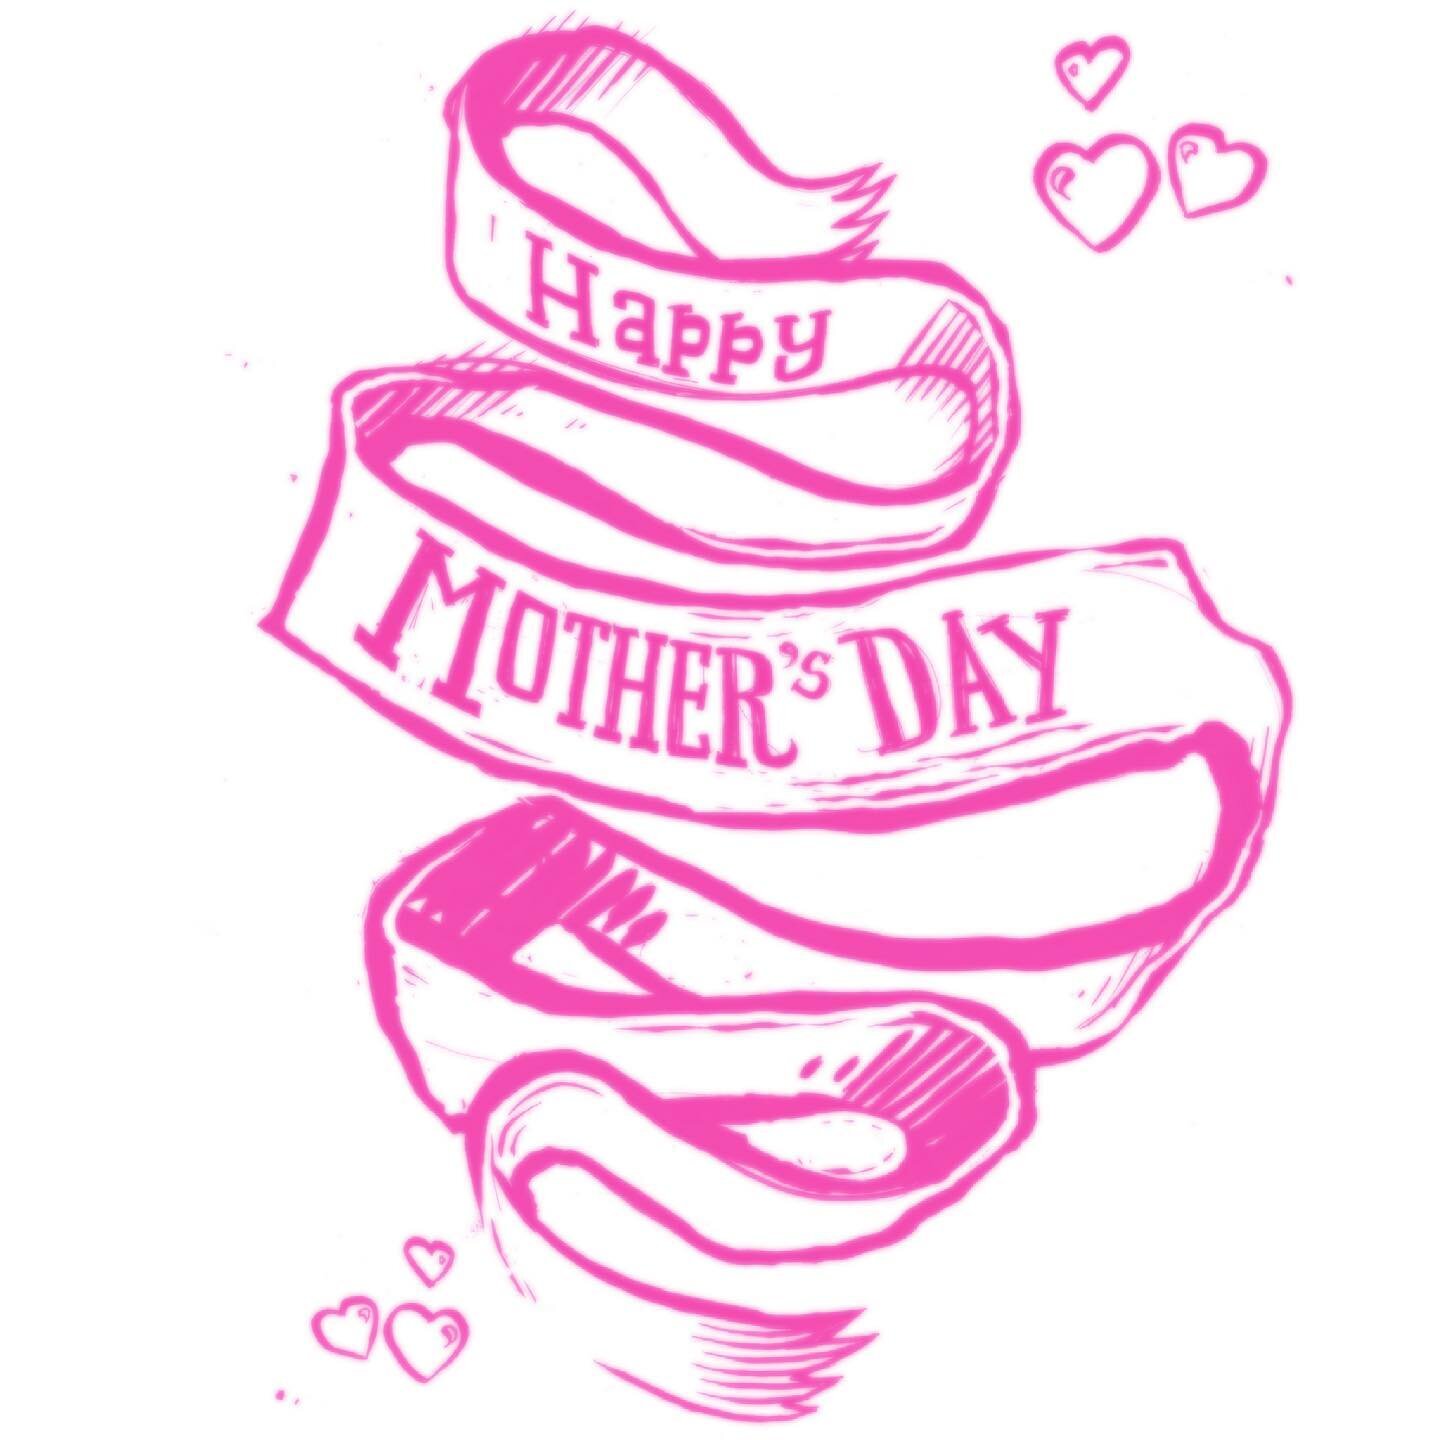 Happy Mother&rsquo;s Day!
.
.
.
#thezigzone